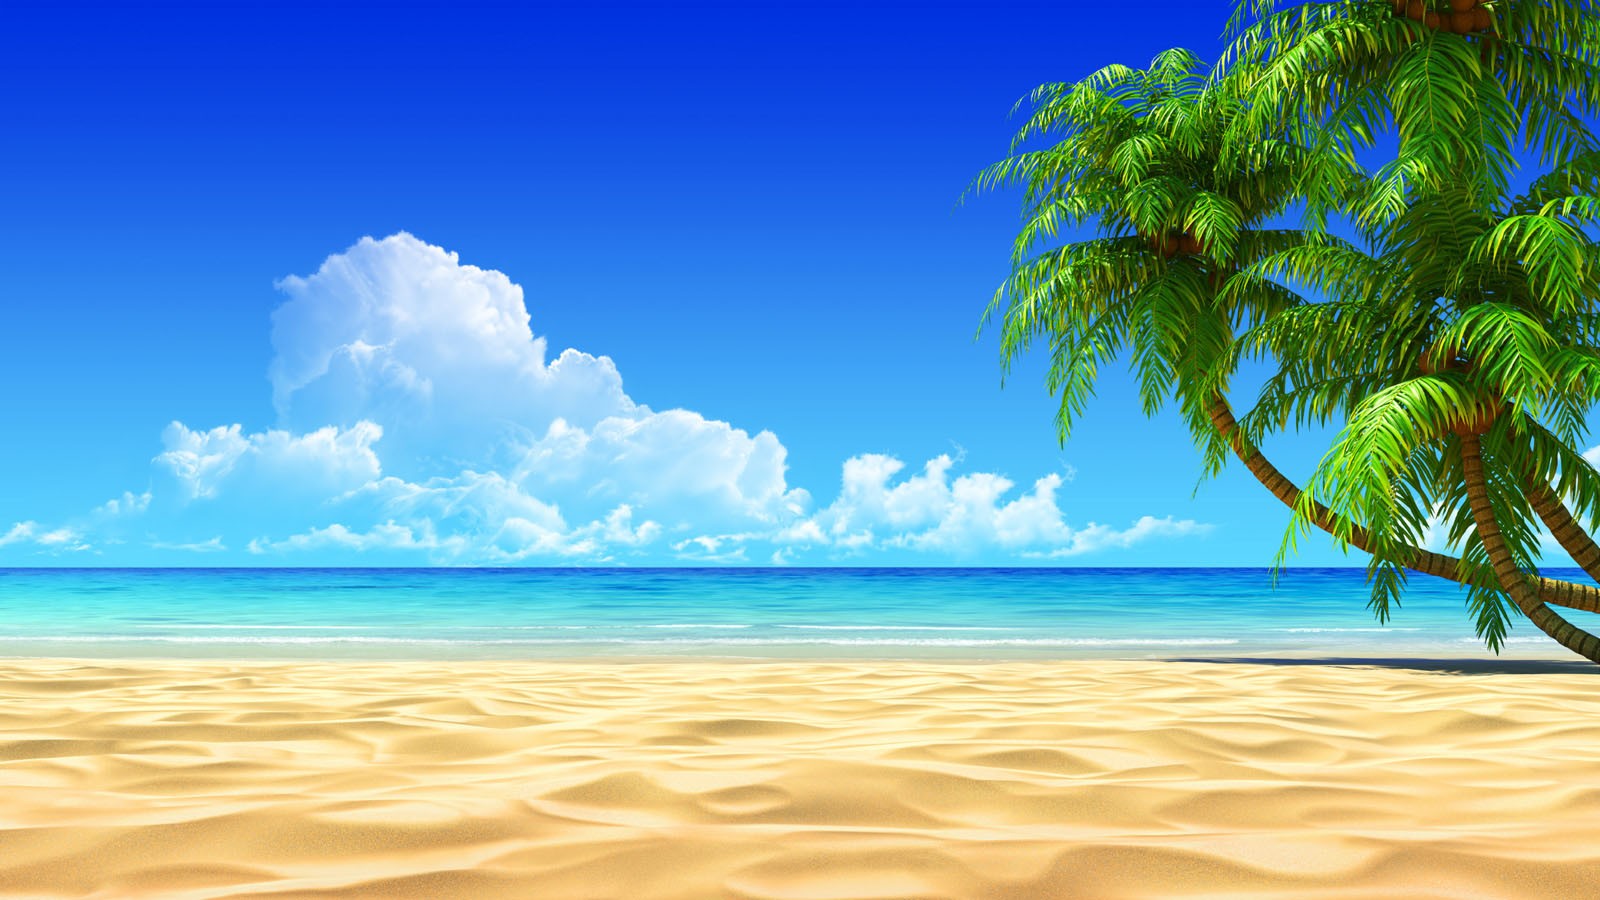 General 1600x900 beach sand palm trees clouds